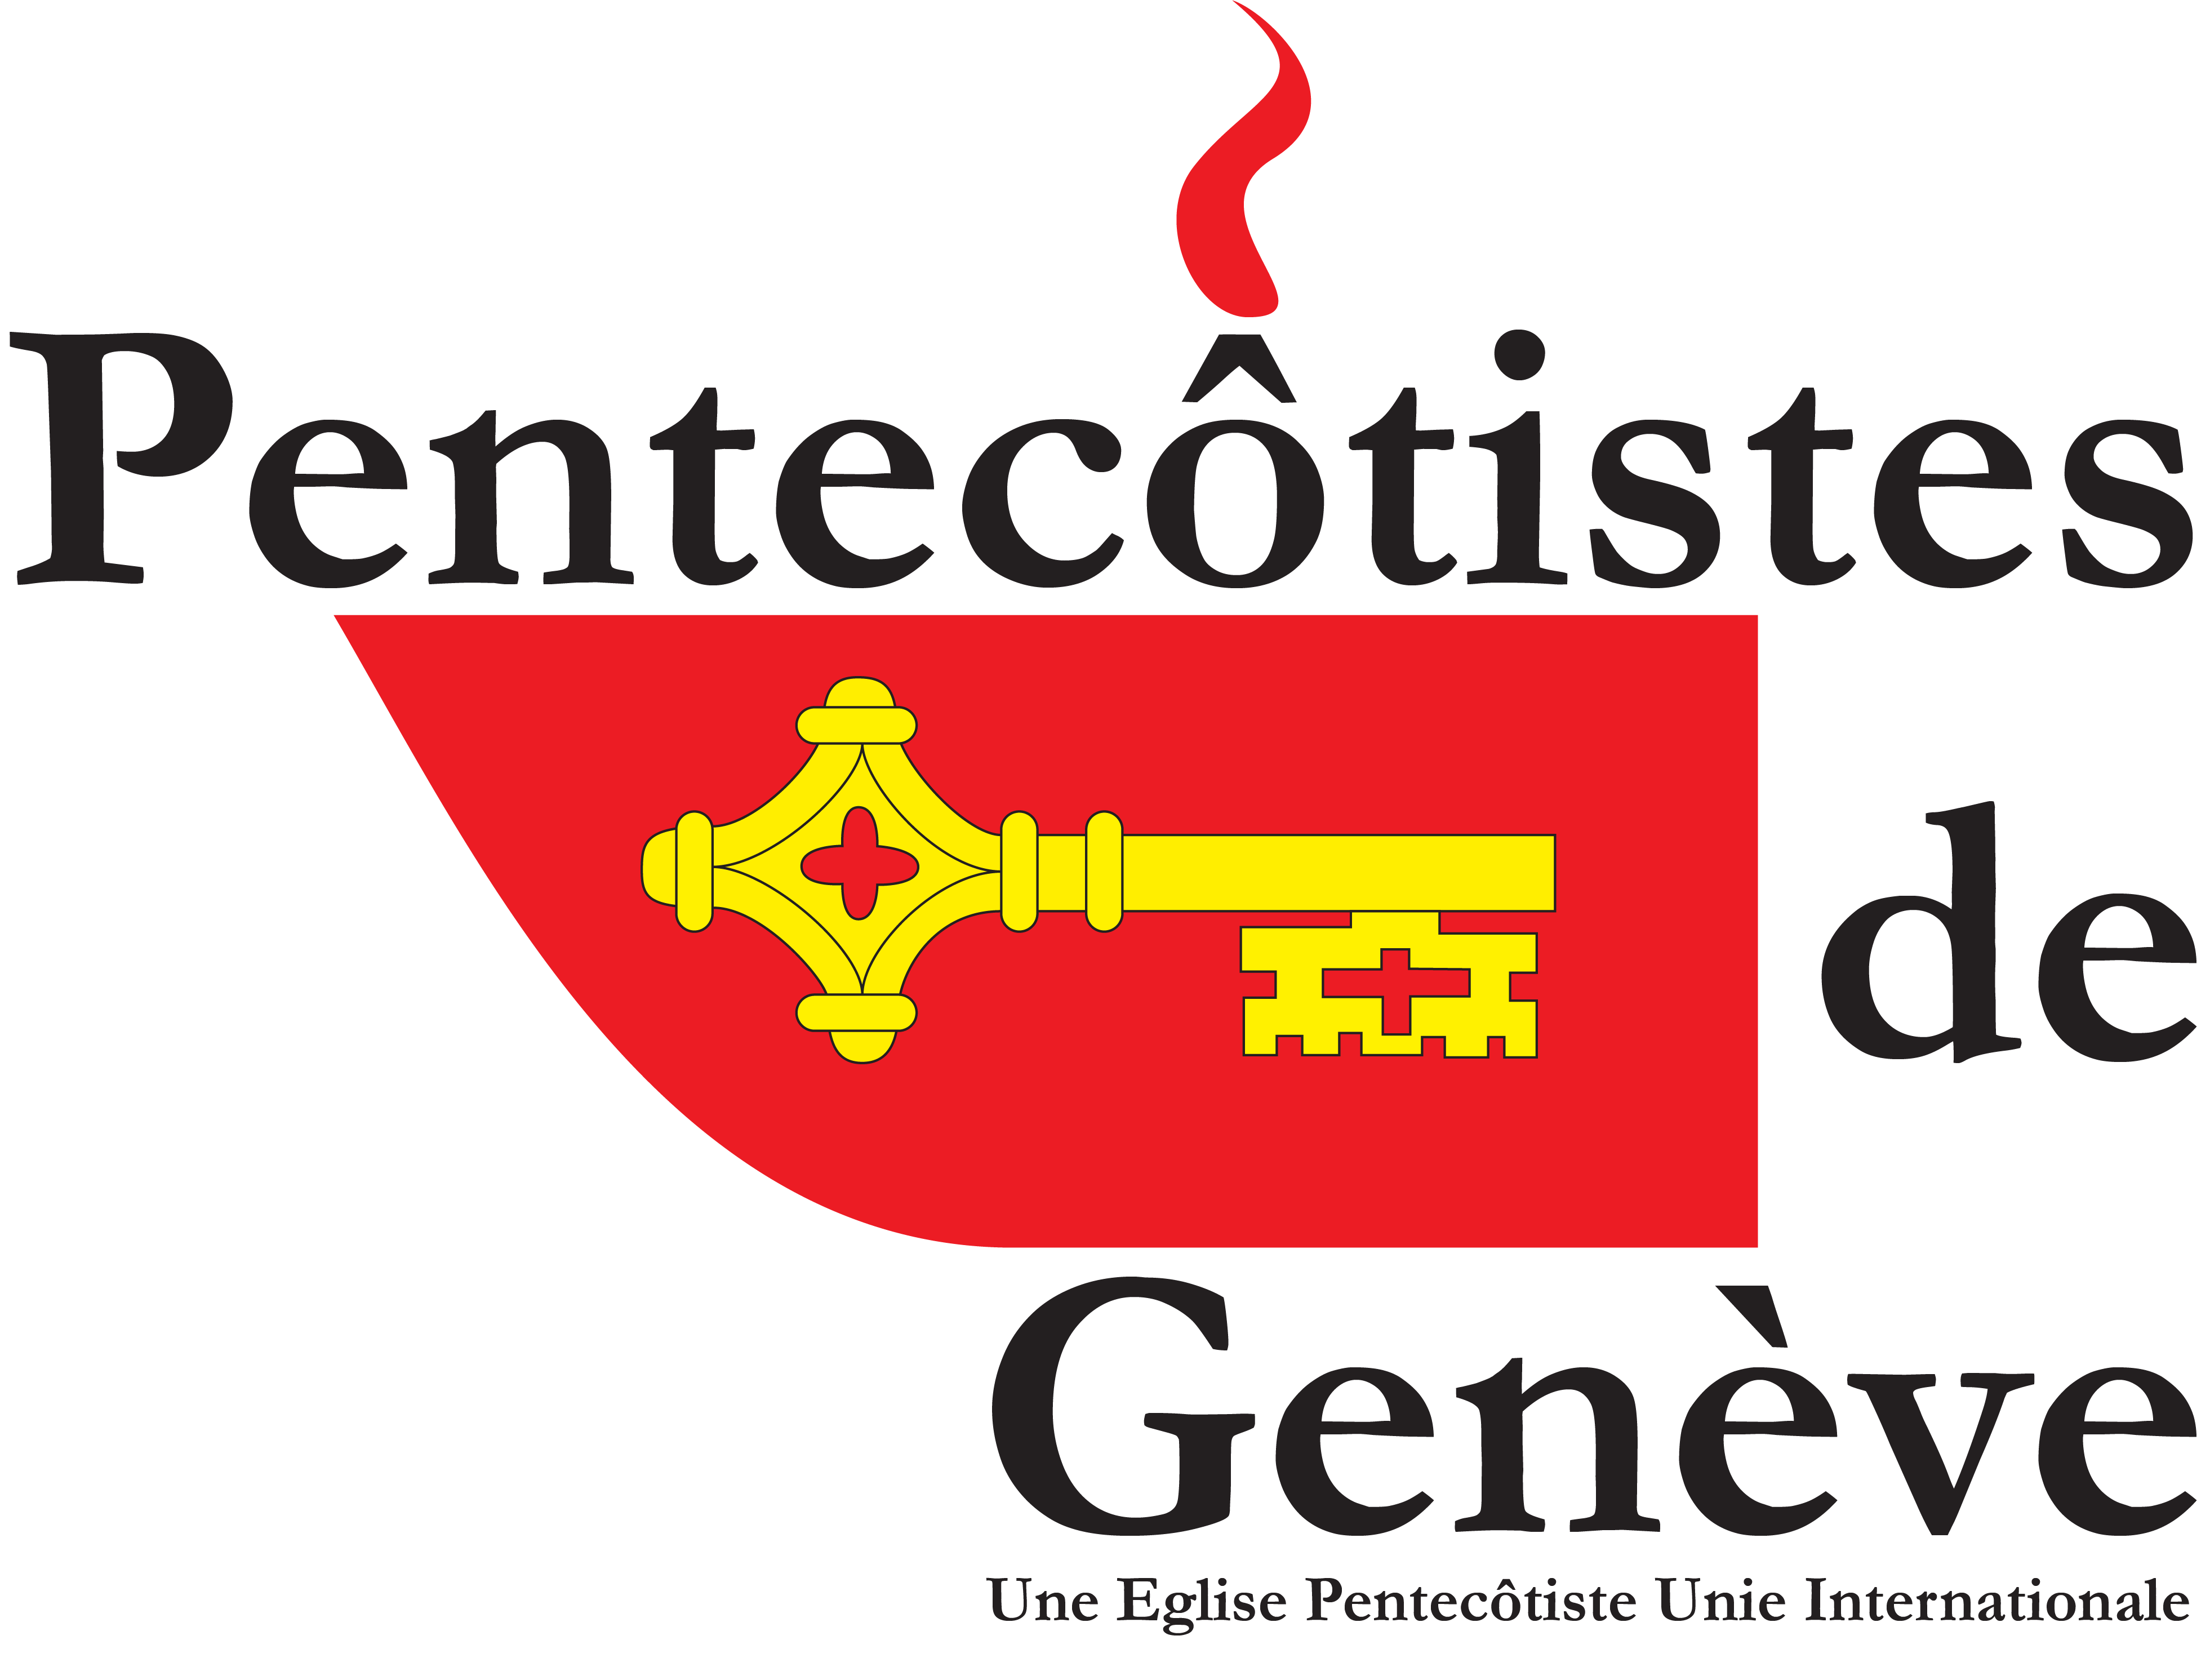 Pentecotistes de Geneve - Pentecostals of Geneva